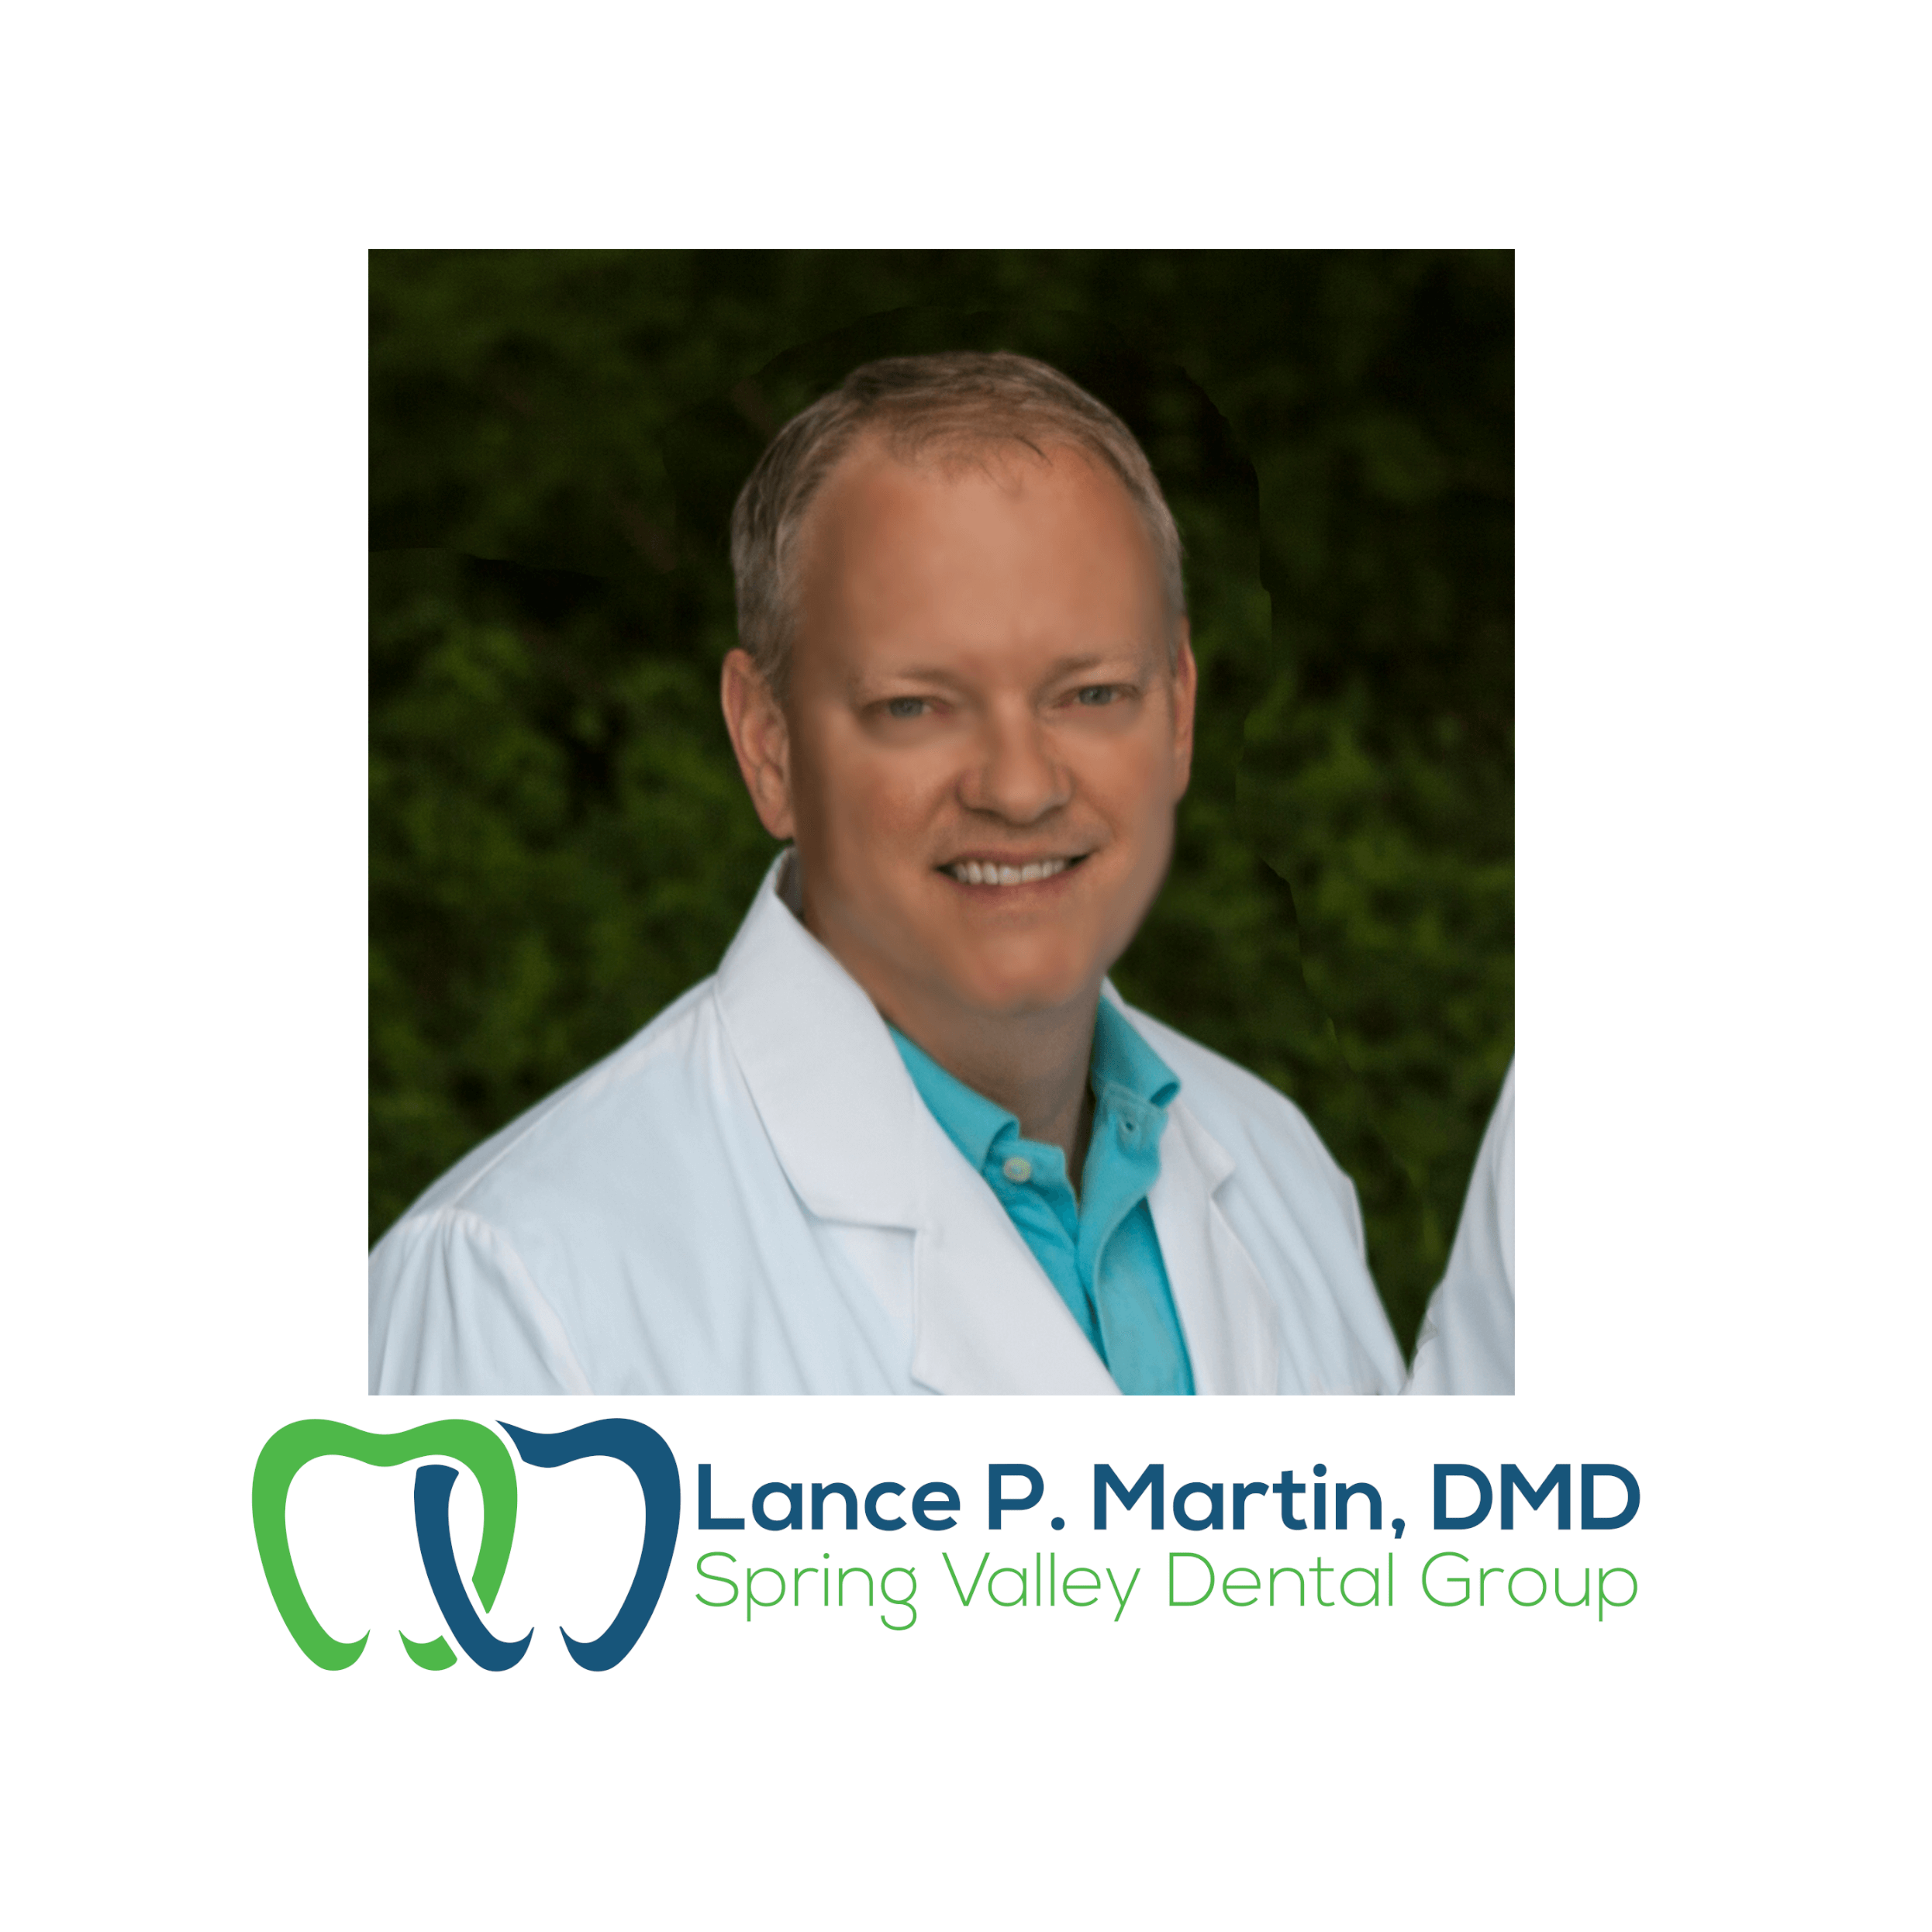 Lance P. Martin, DMD